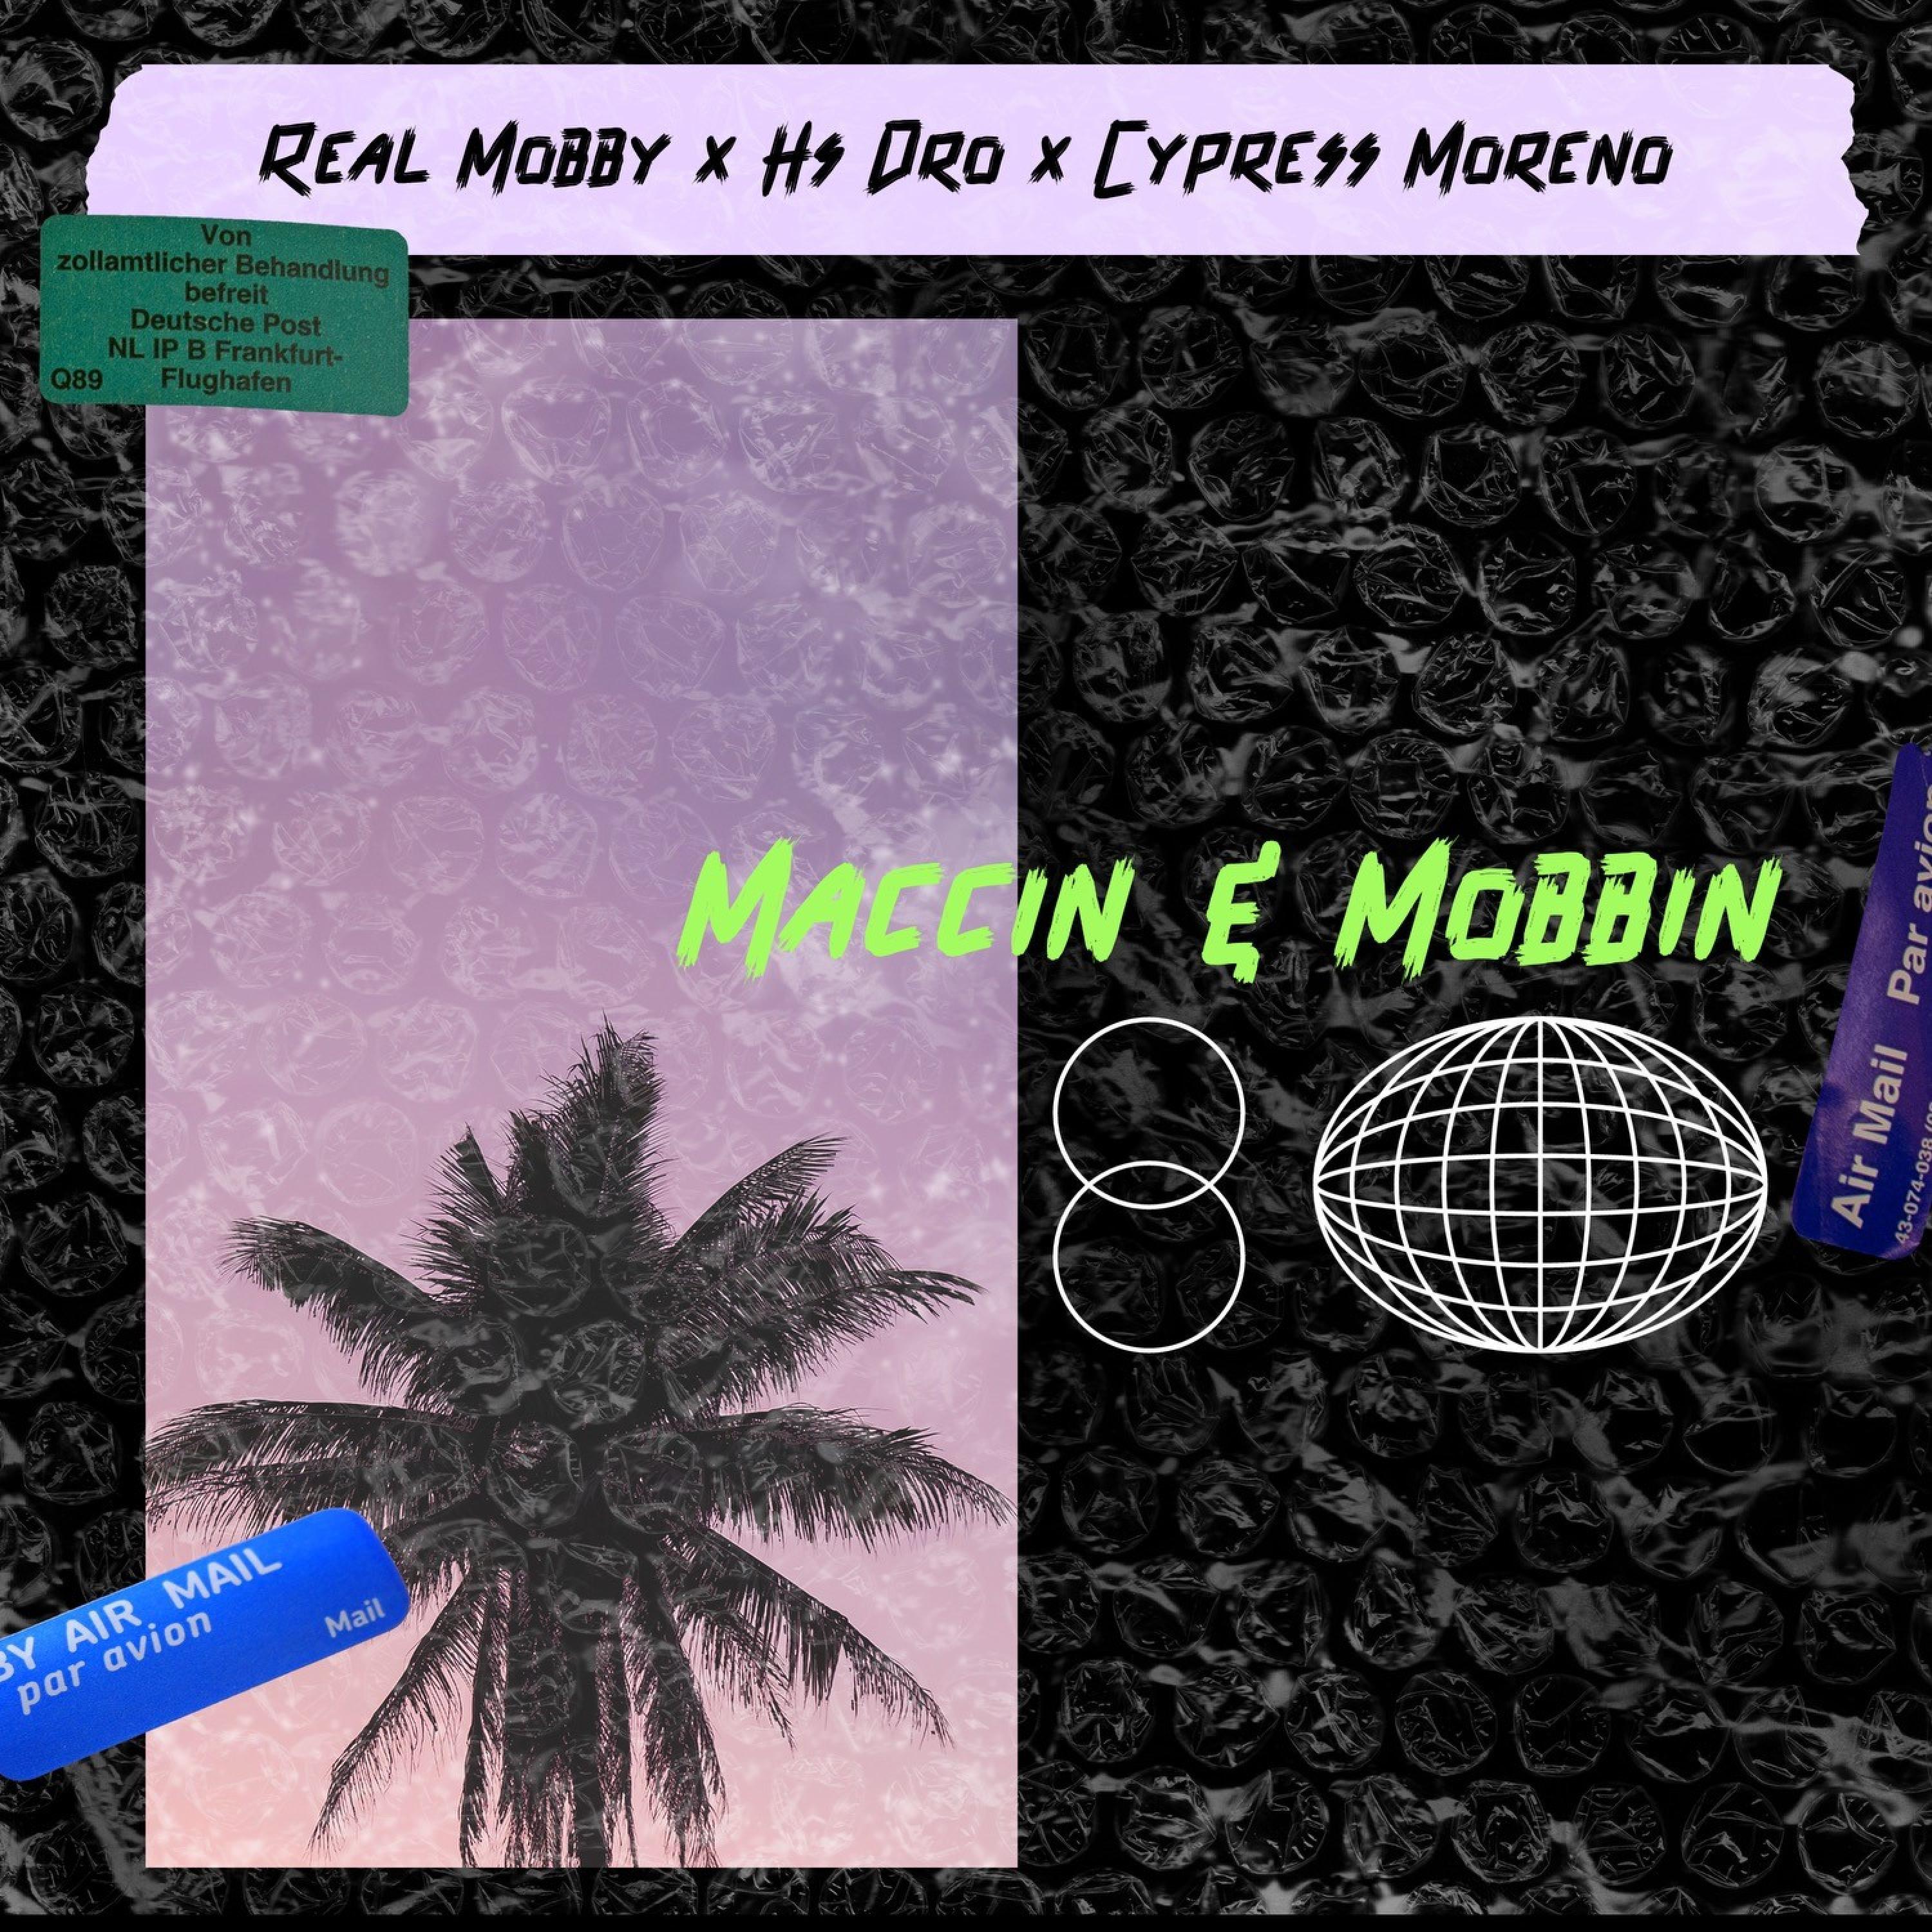 Real Mobby - Maccin & Mobbin (feat. Hs Dro & Cypress Moreno)